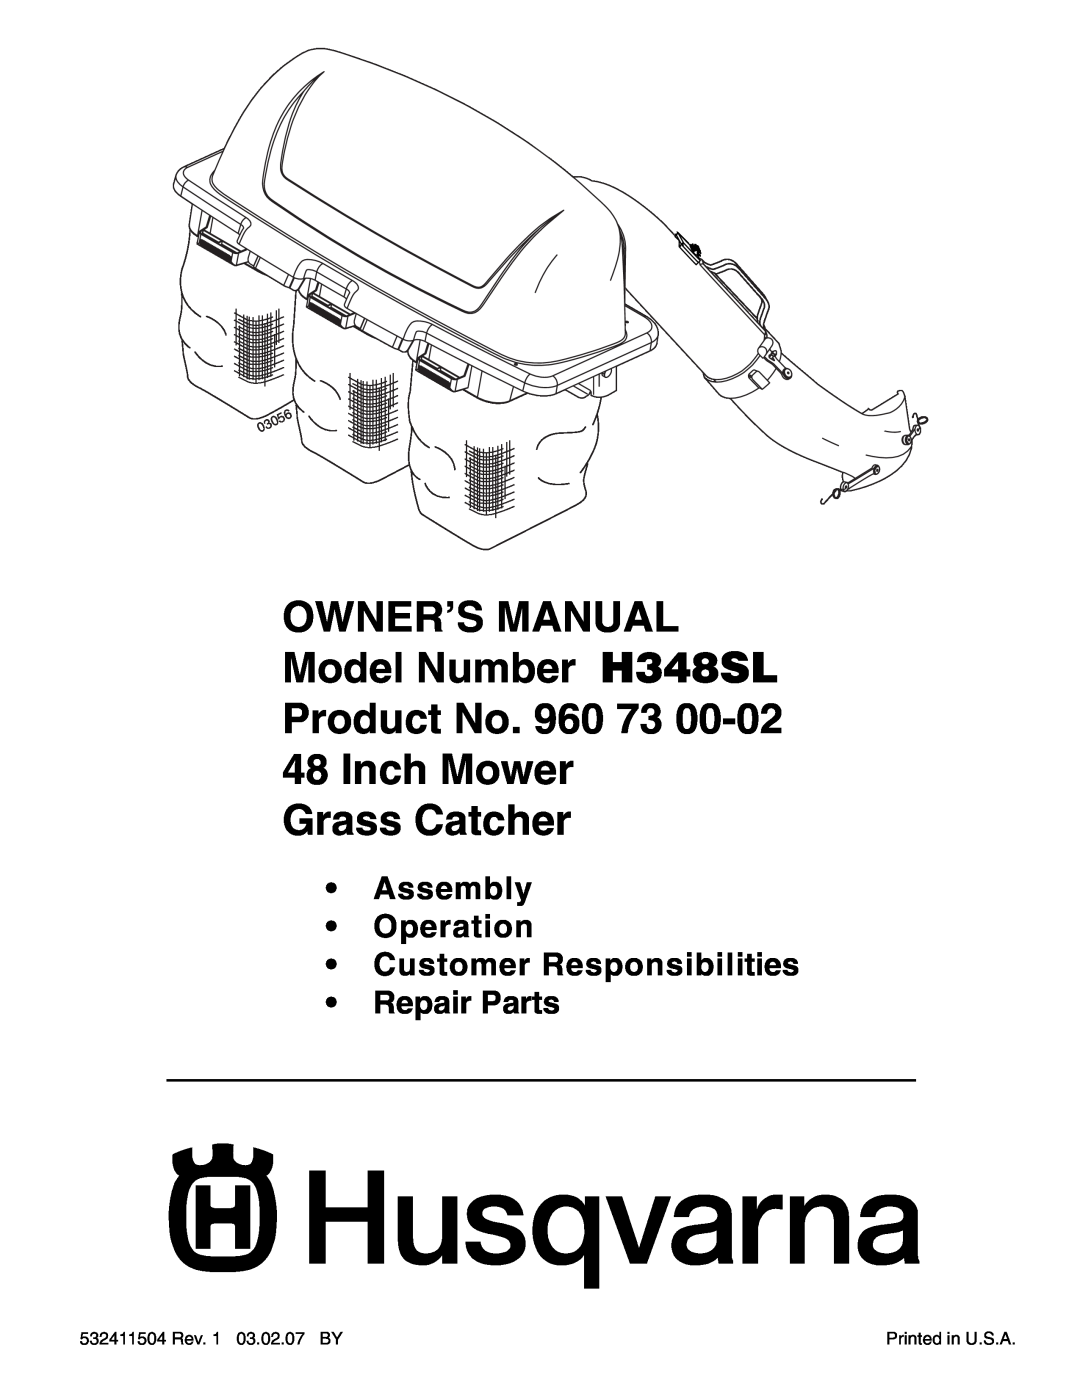 Husqvarna H348SL owner manual Grass Catcher, Assembly Operation Customer Responsibilities Repair Parts 